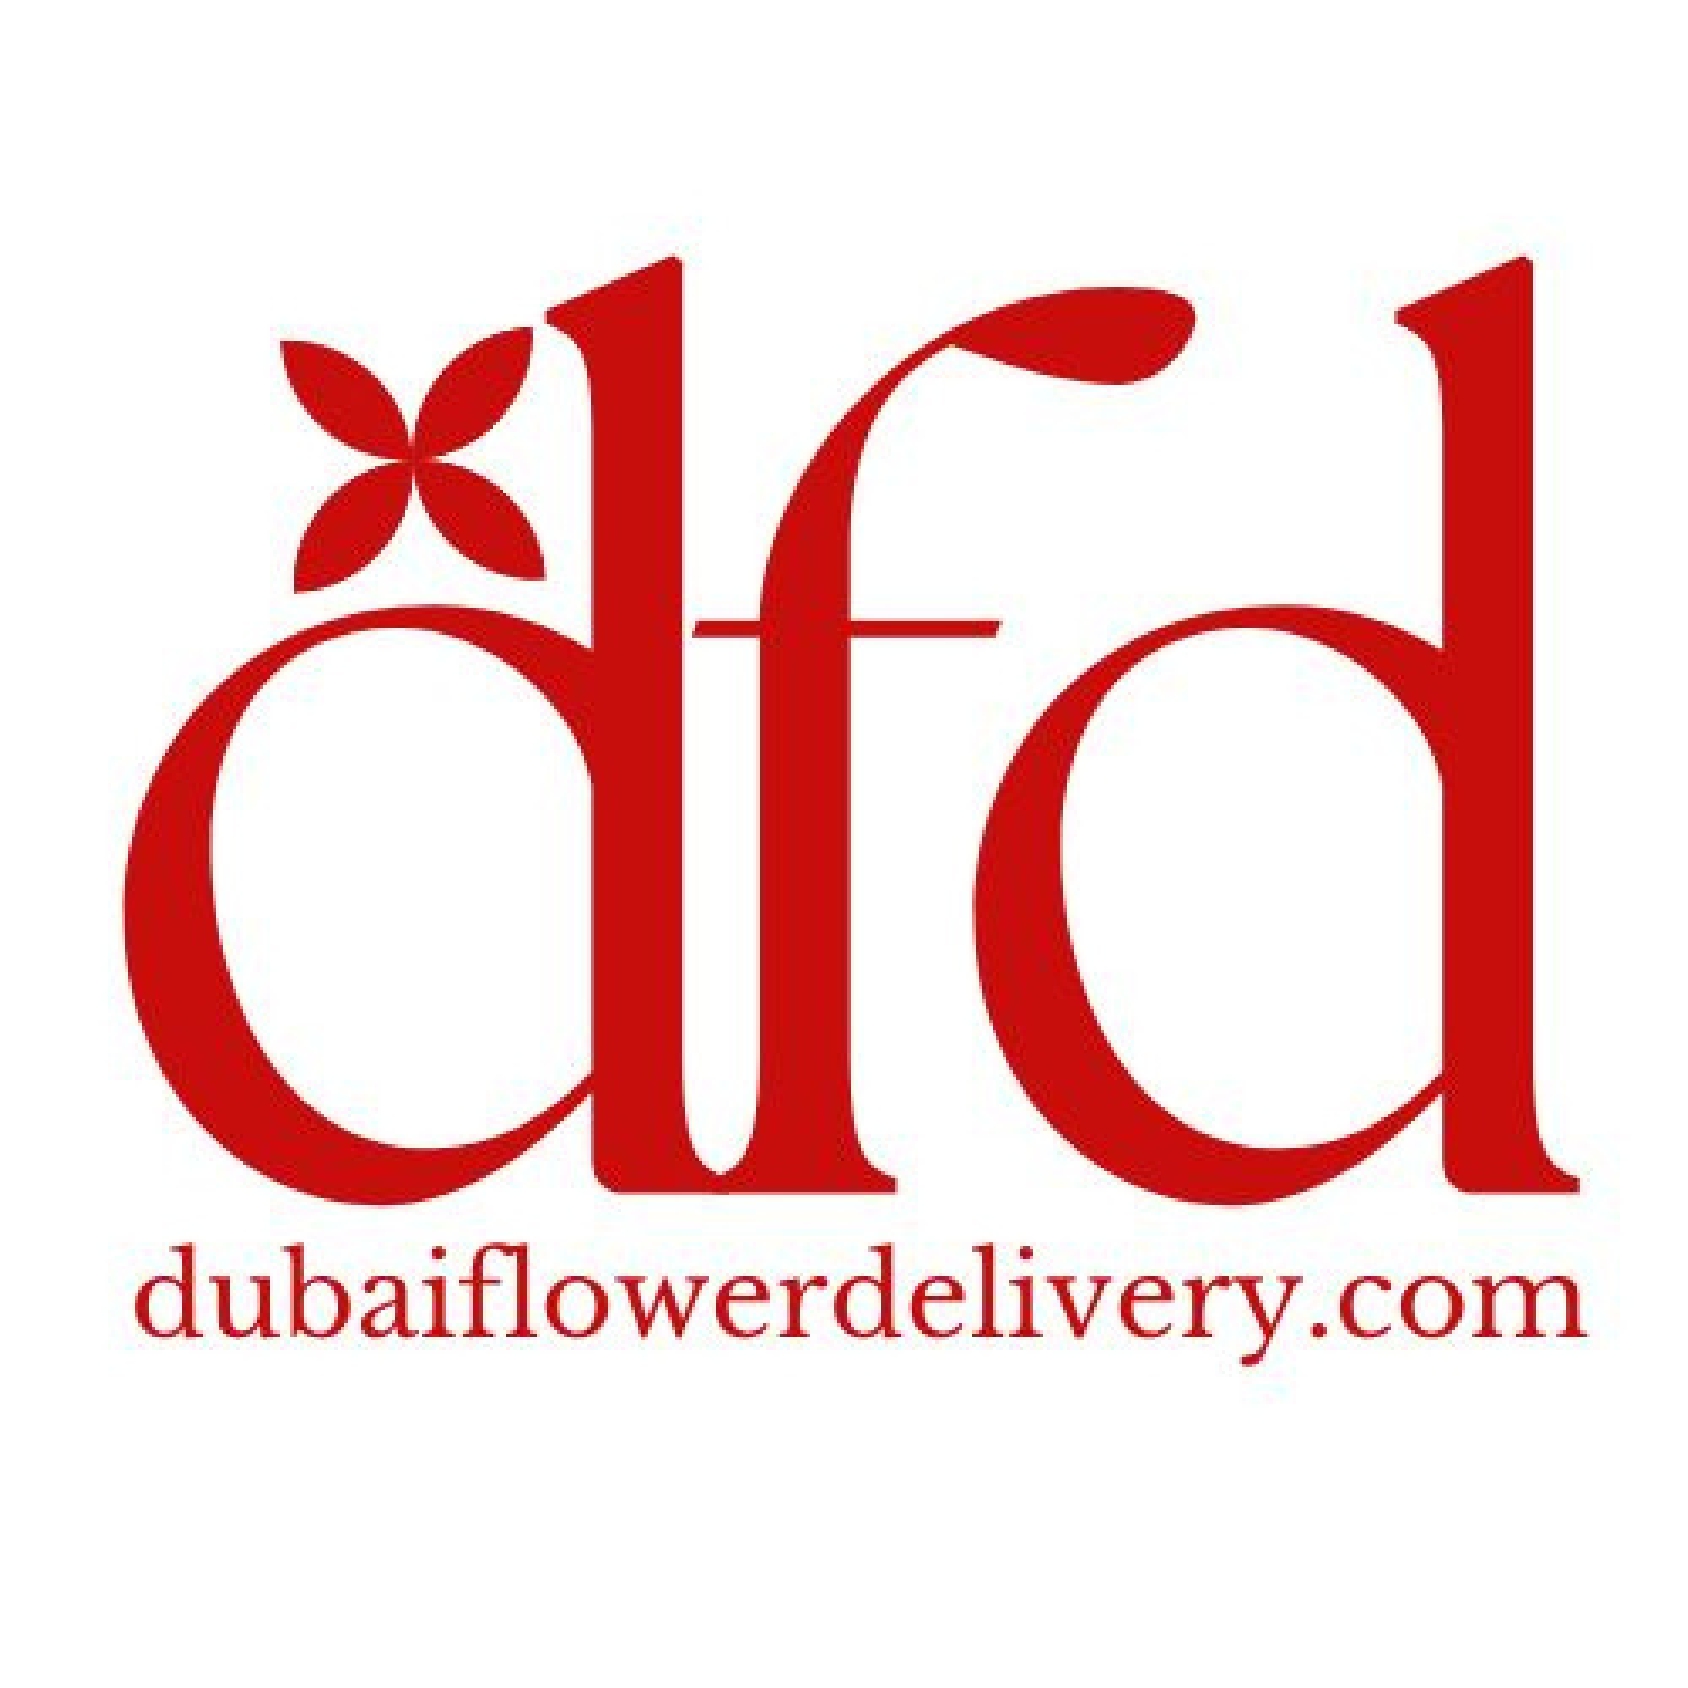 Dubai Flower Delivery